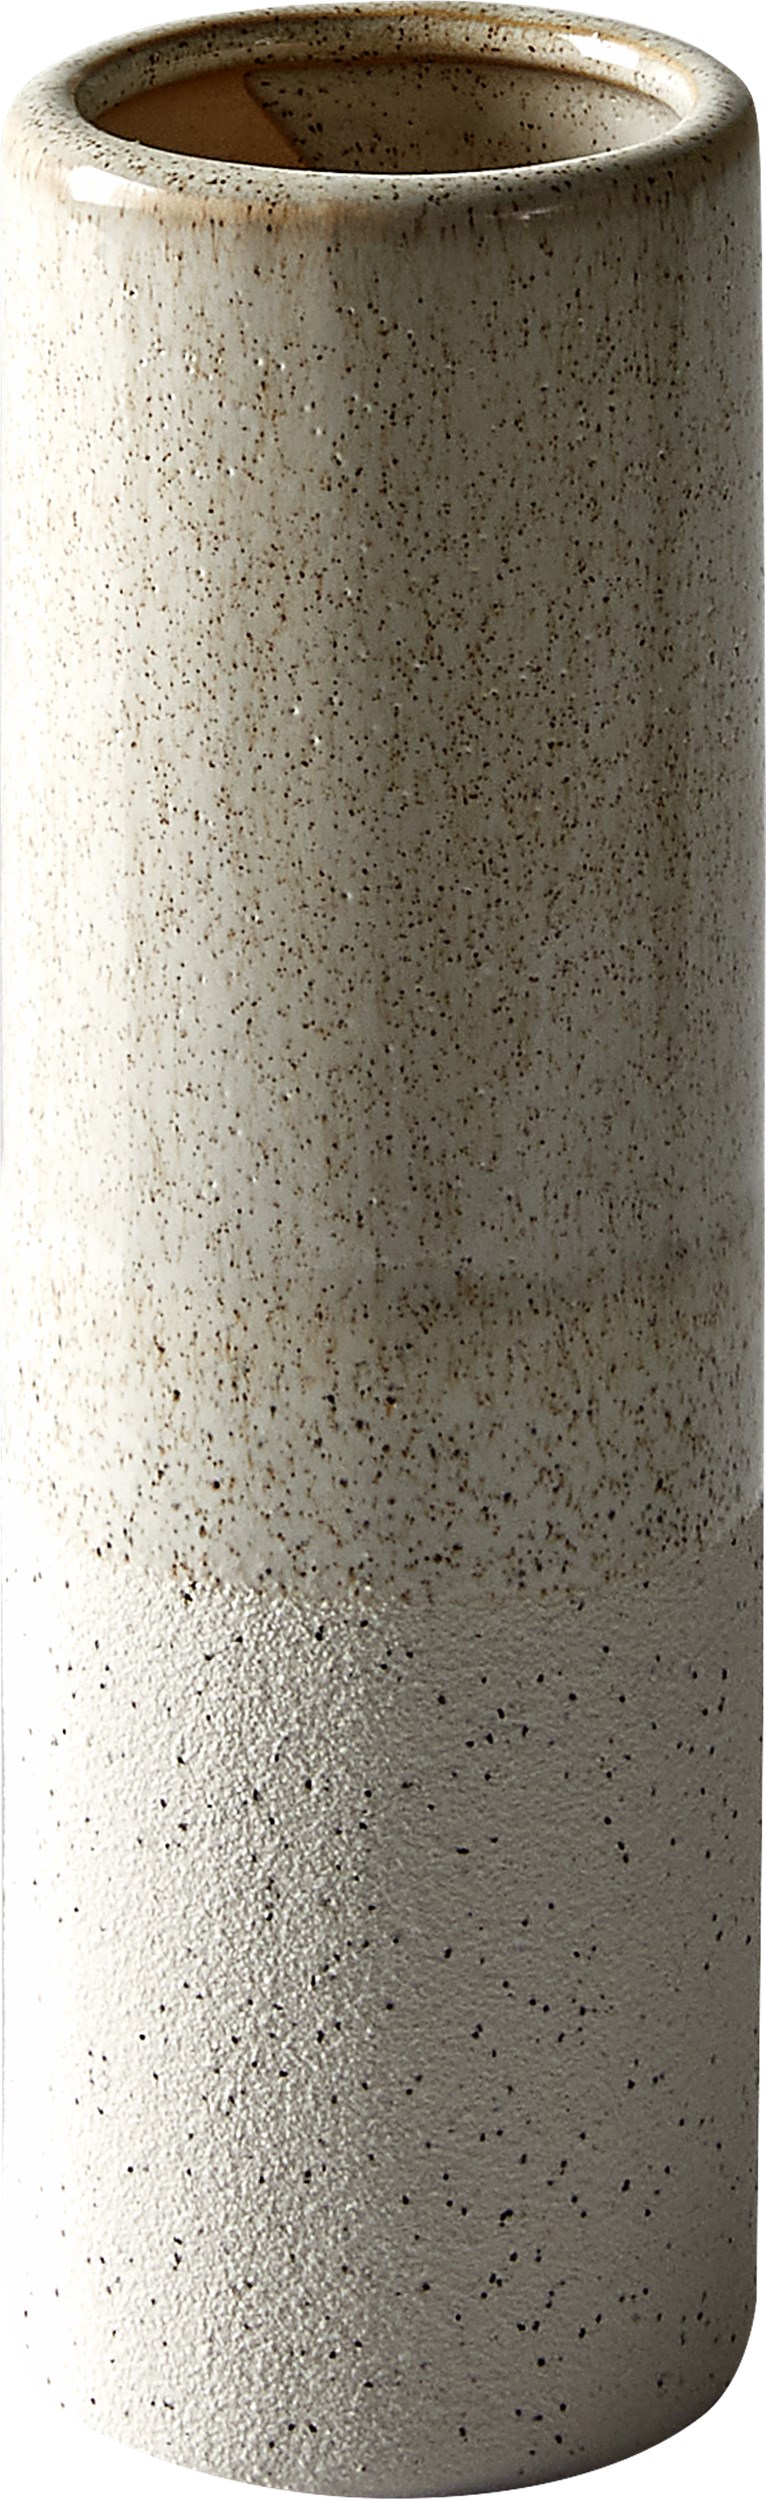 Oana vas 18 x 6 cm - Off-white keramik